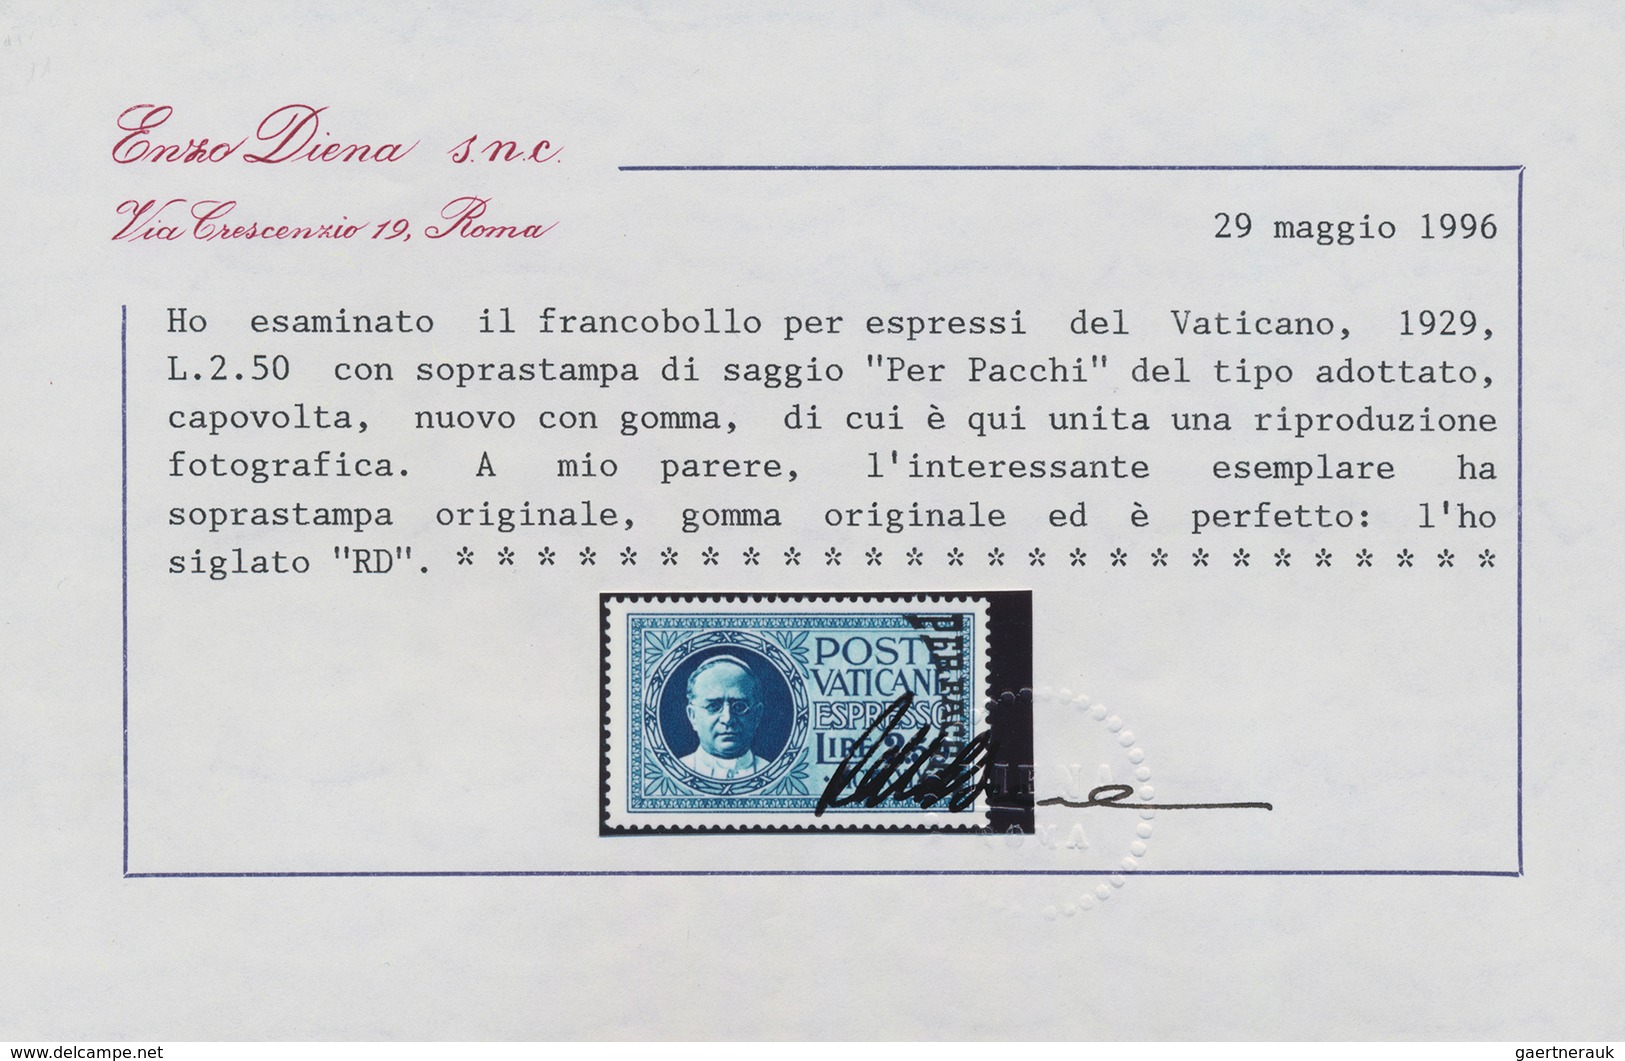 Vatikan - Paketmarken: 1931, 2,50 L Blue Express Stamp With INVERTED (vertical Downwards At Right Si - Parcel Post